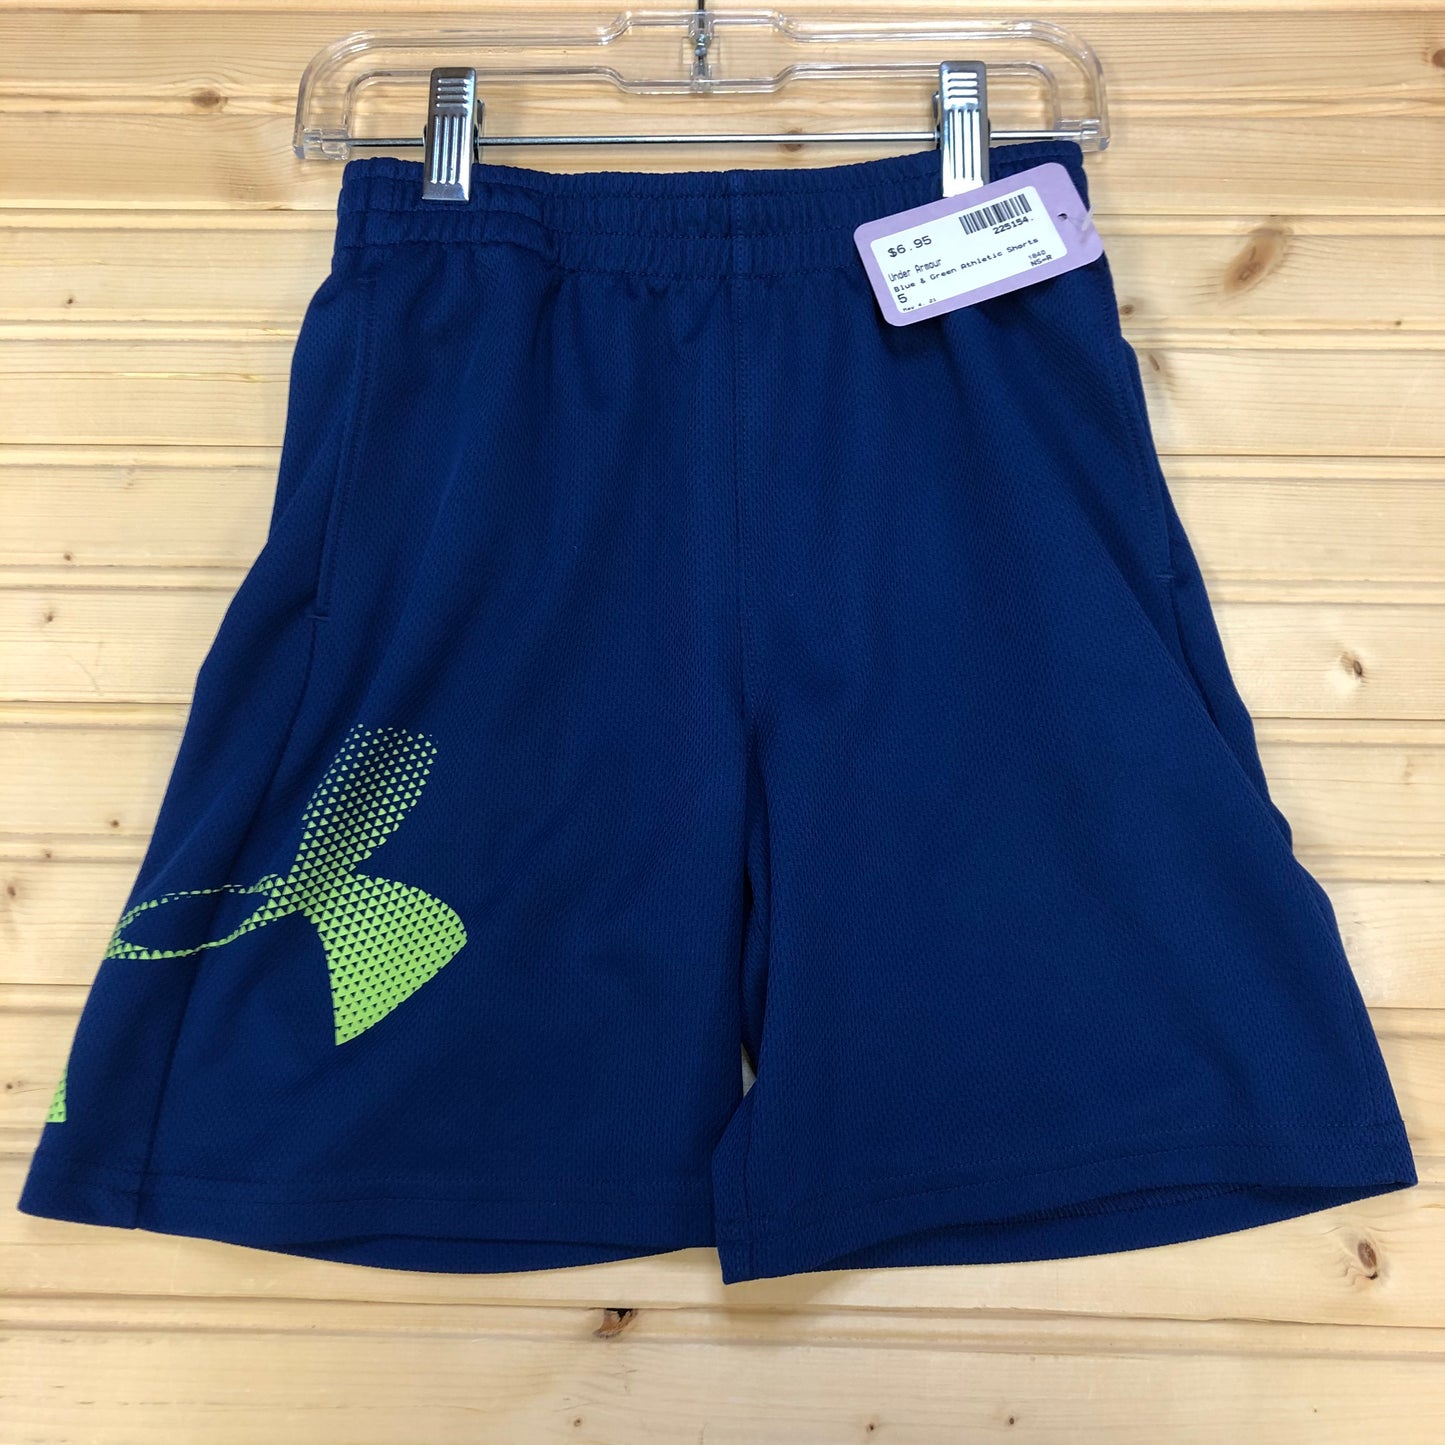 Blue & Green Athletic Shorts